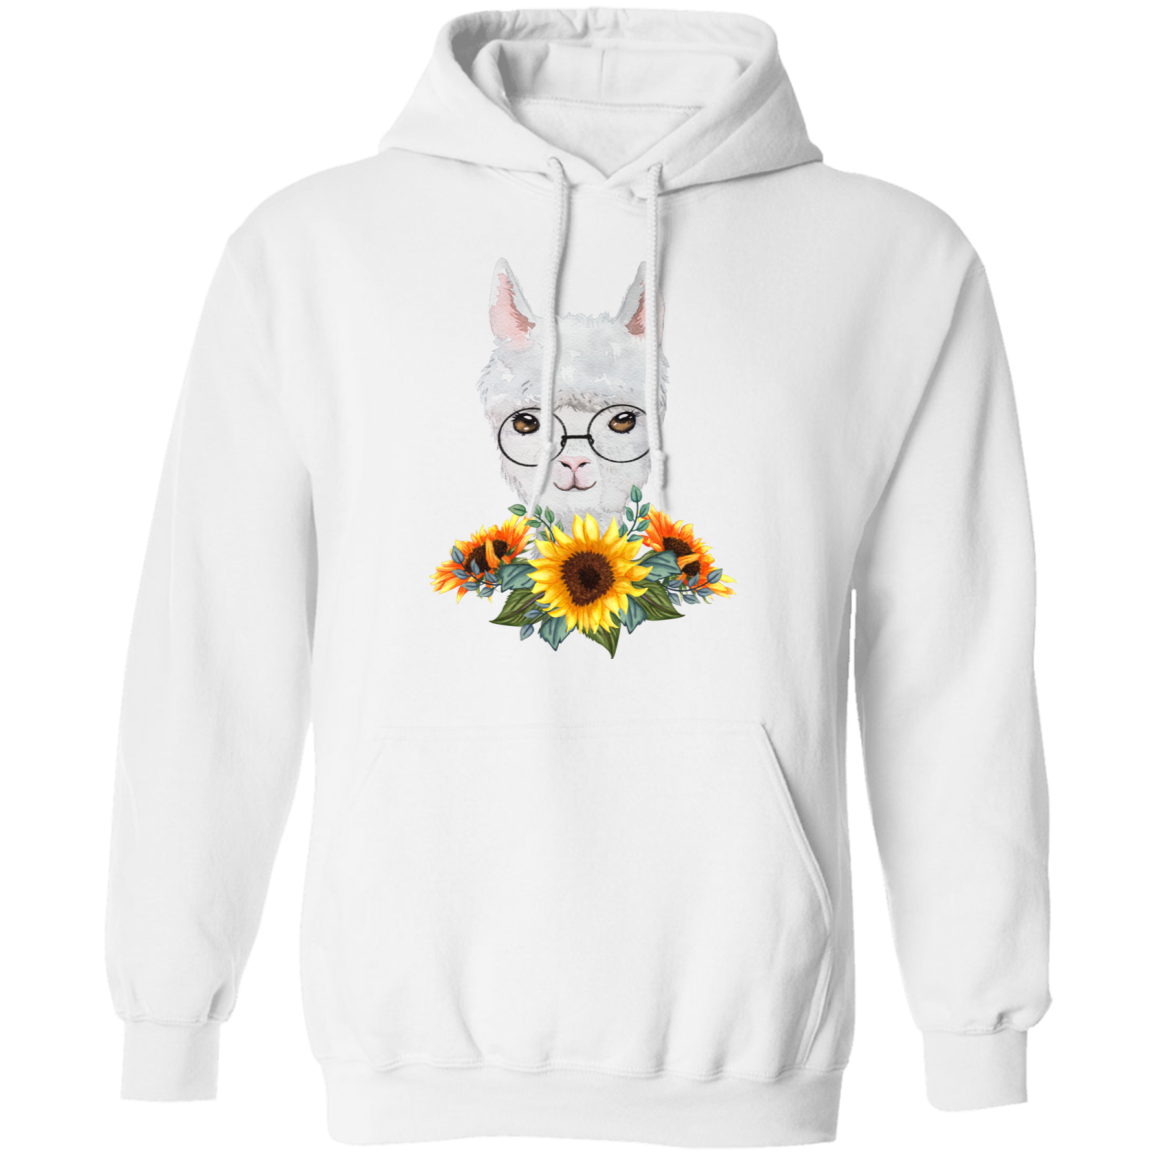 Llama Sunflower hoodie